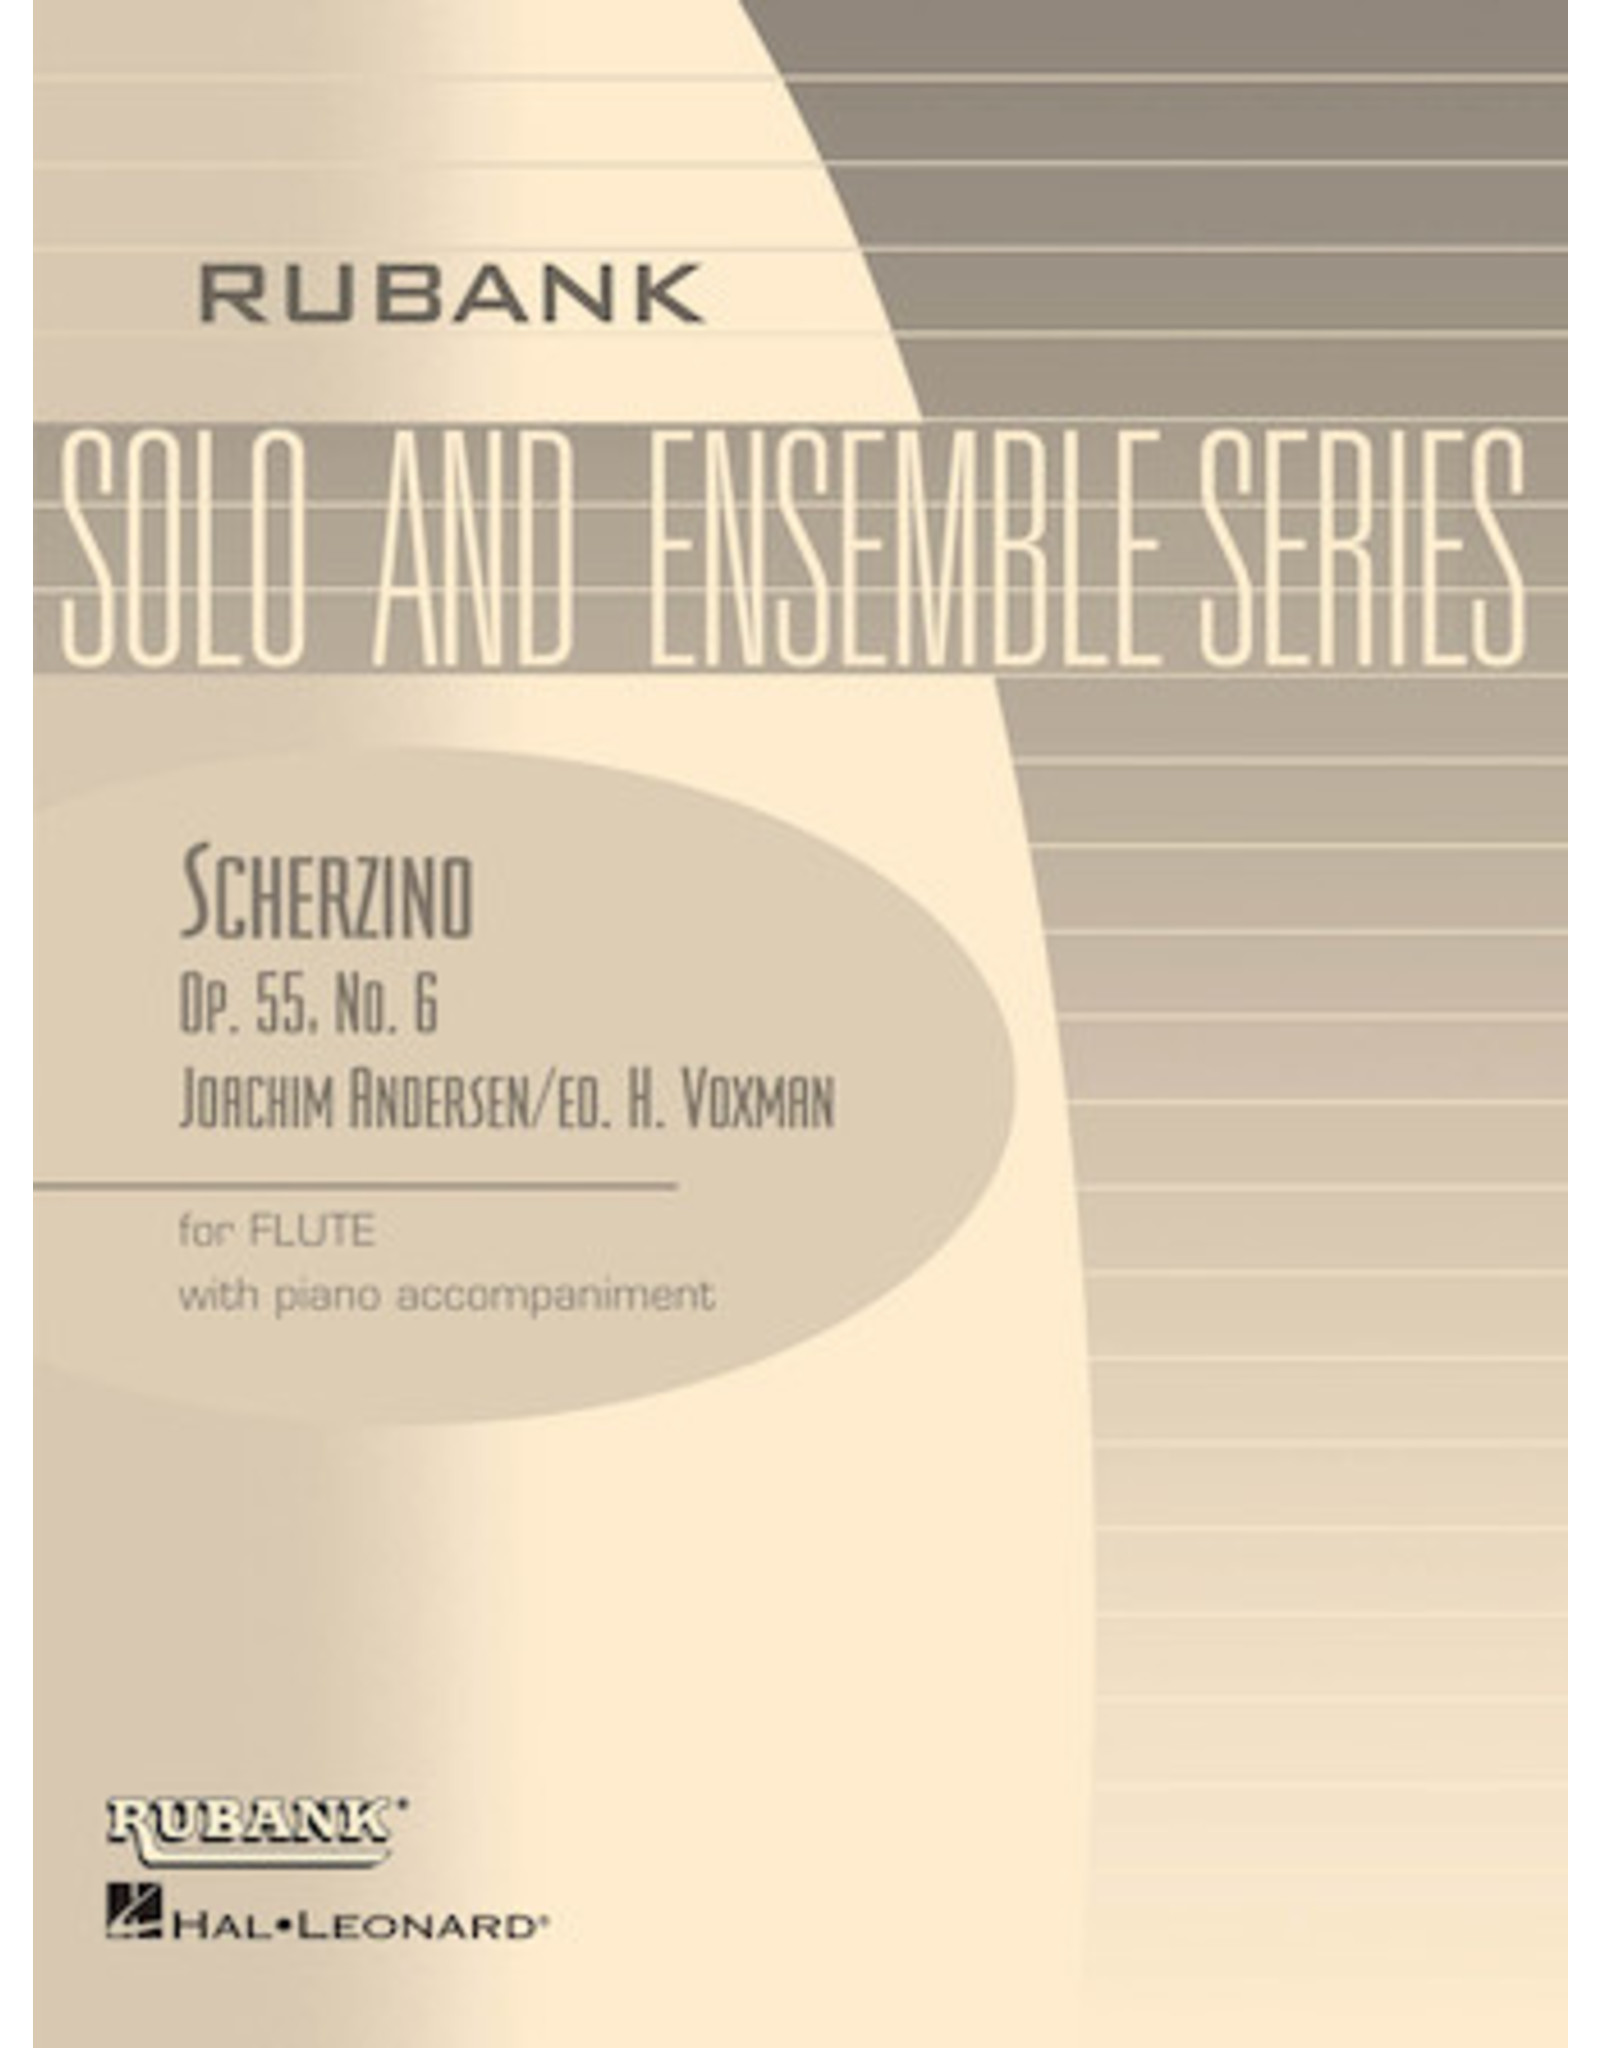 Hal Leonard Andersen - Scherzino (from Eight Performance Pieces, Op. 55) Flute Solo with Piano - Grade 3 (Andersen/Voxman) Rubank Solo/Ensemble Sheet